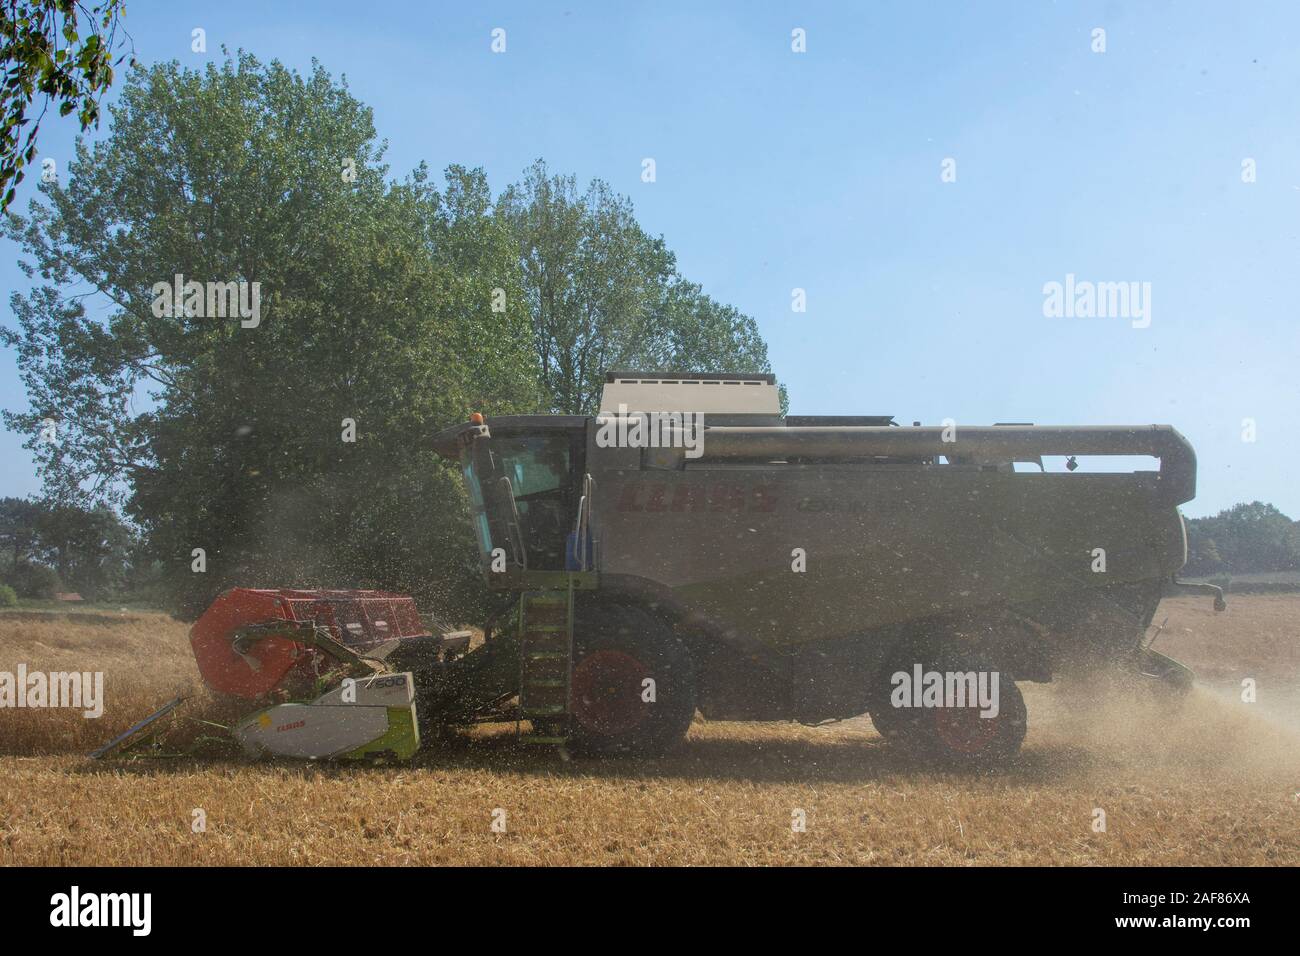 Combine harvester combining oats Stock Photo